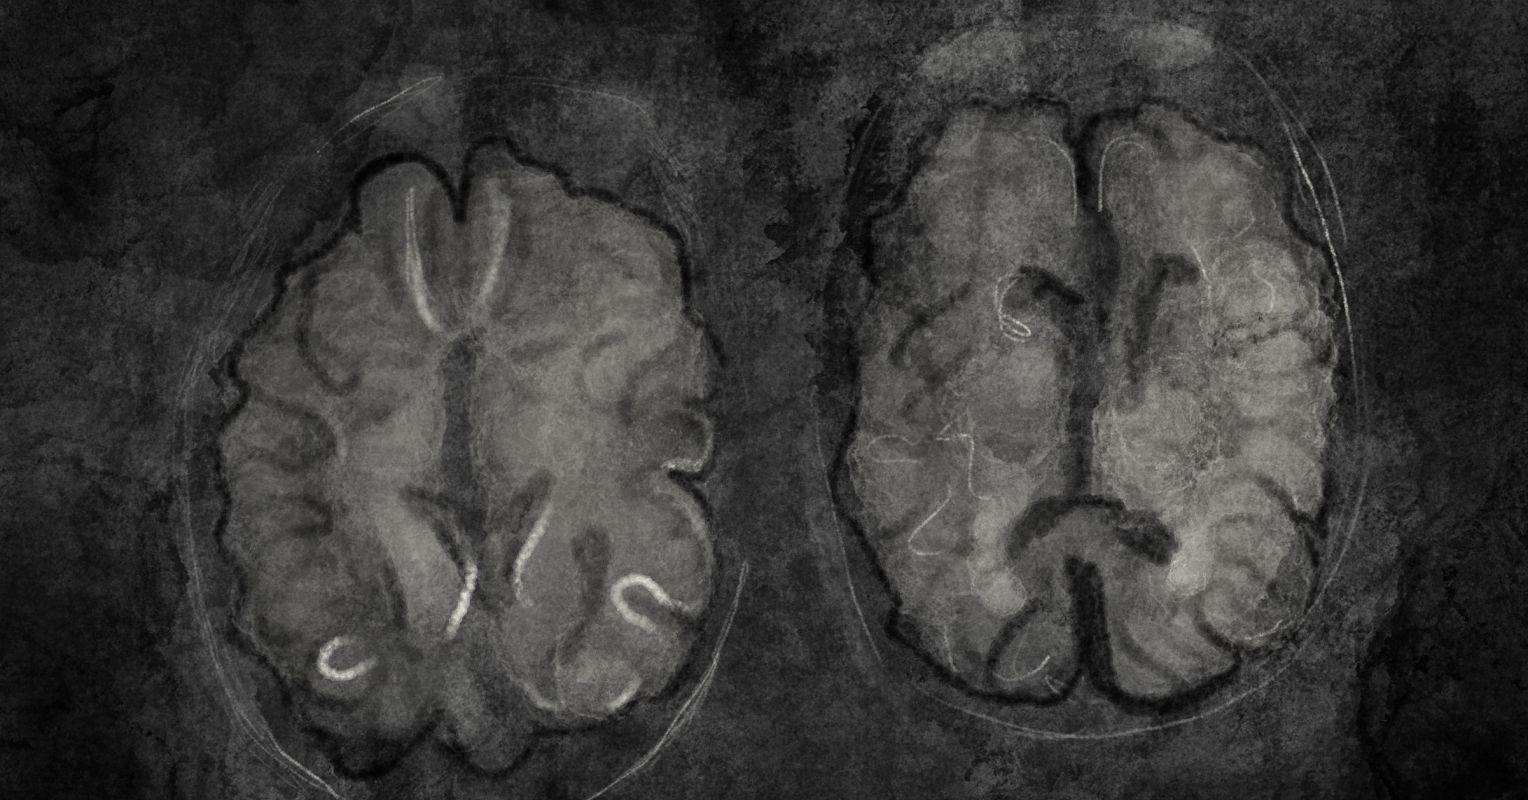 brain scan schizophrenia